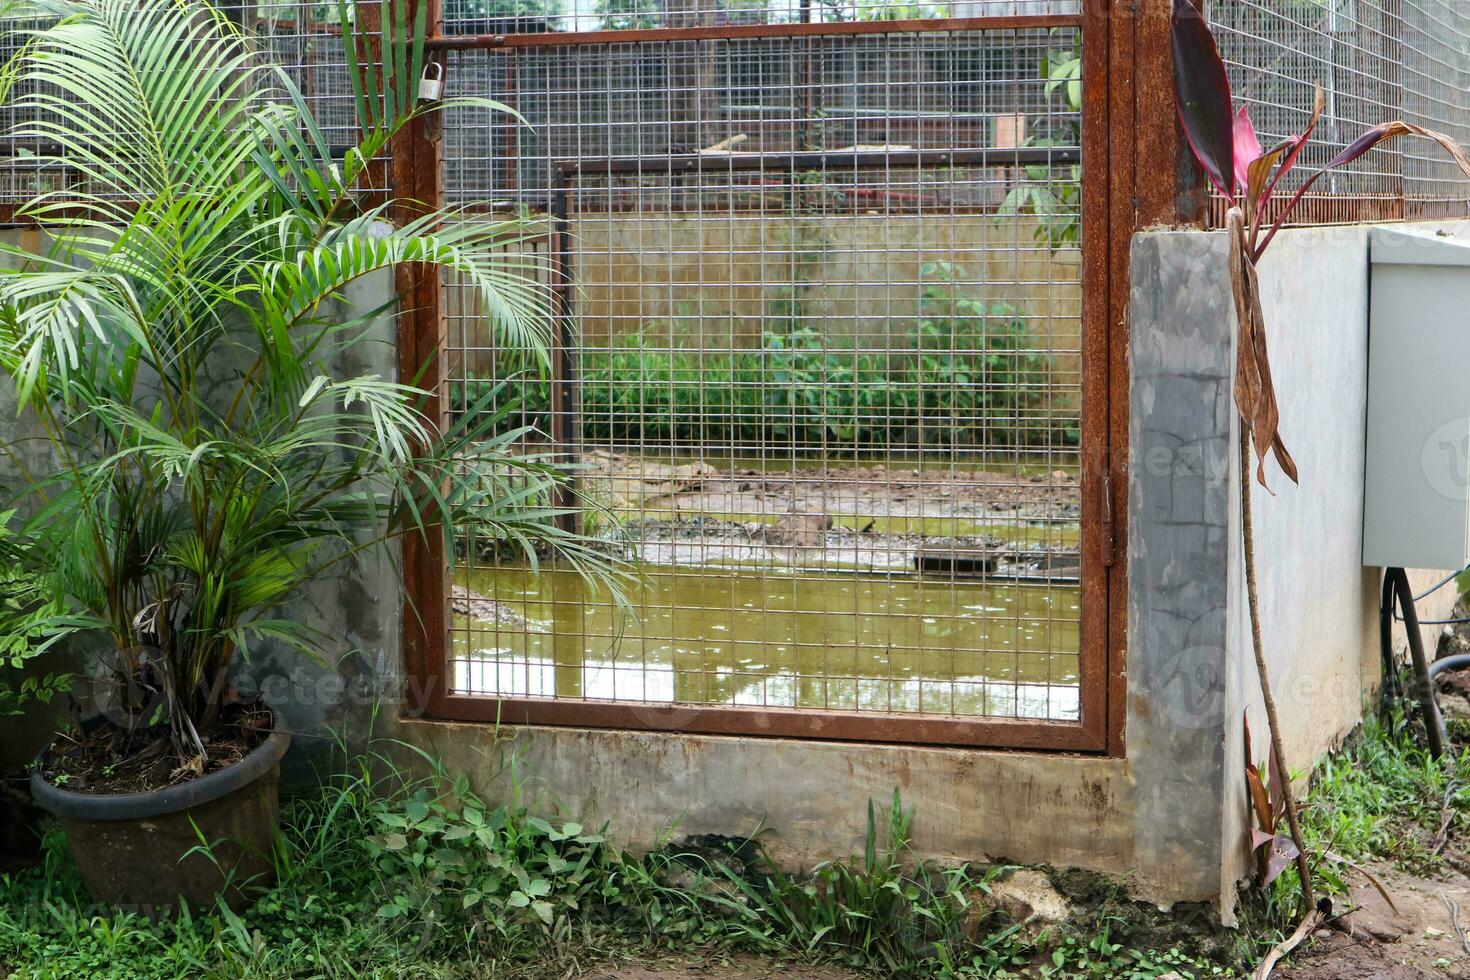 a crocodile that looks like it's peeking behind the fence in the crocodile enclosure photo